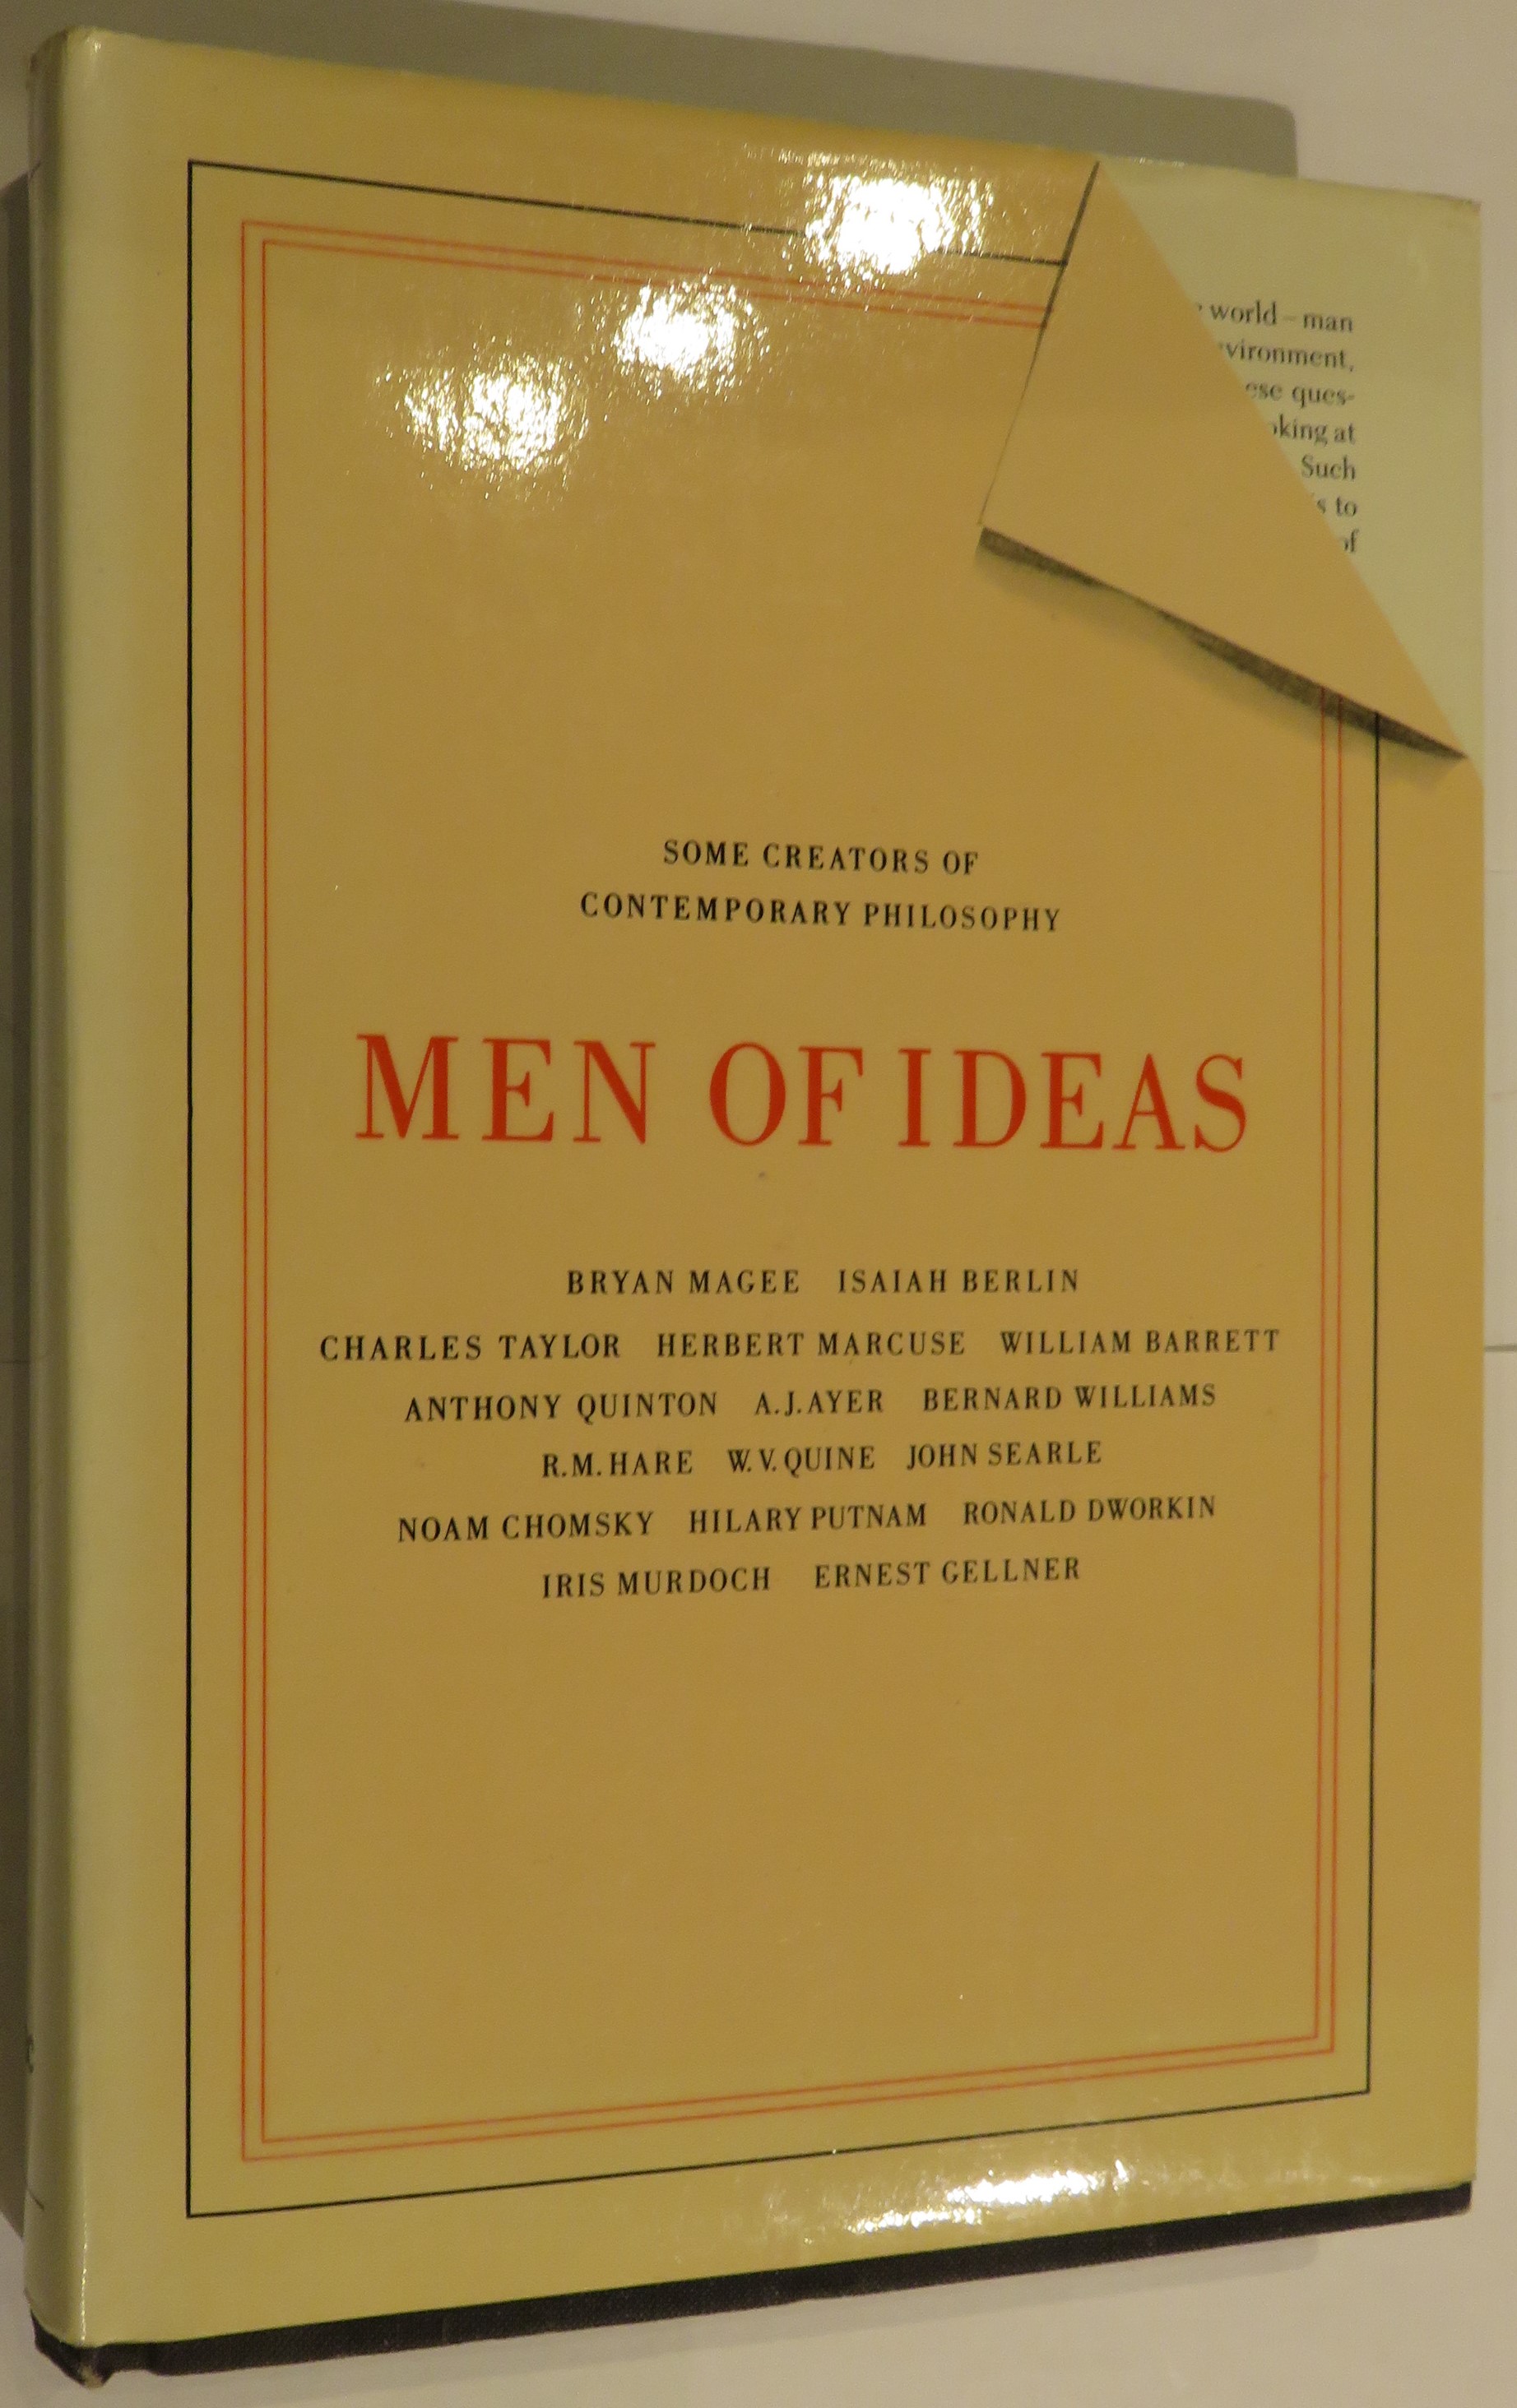 Men of Ideas: Some Creators of Contemporary Philosophy